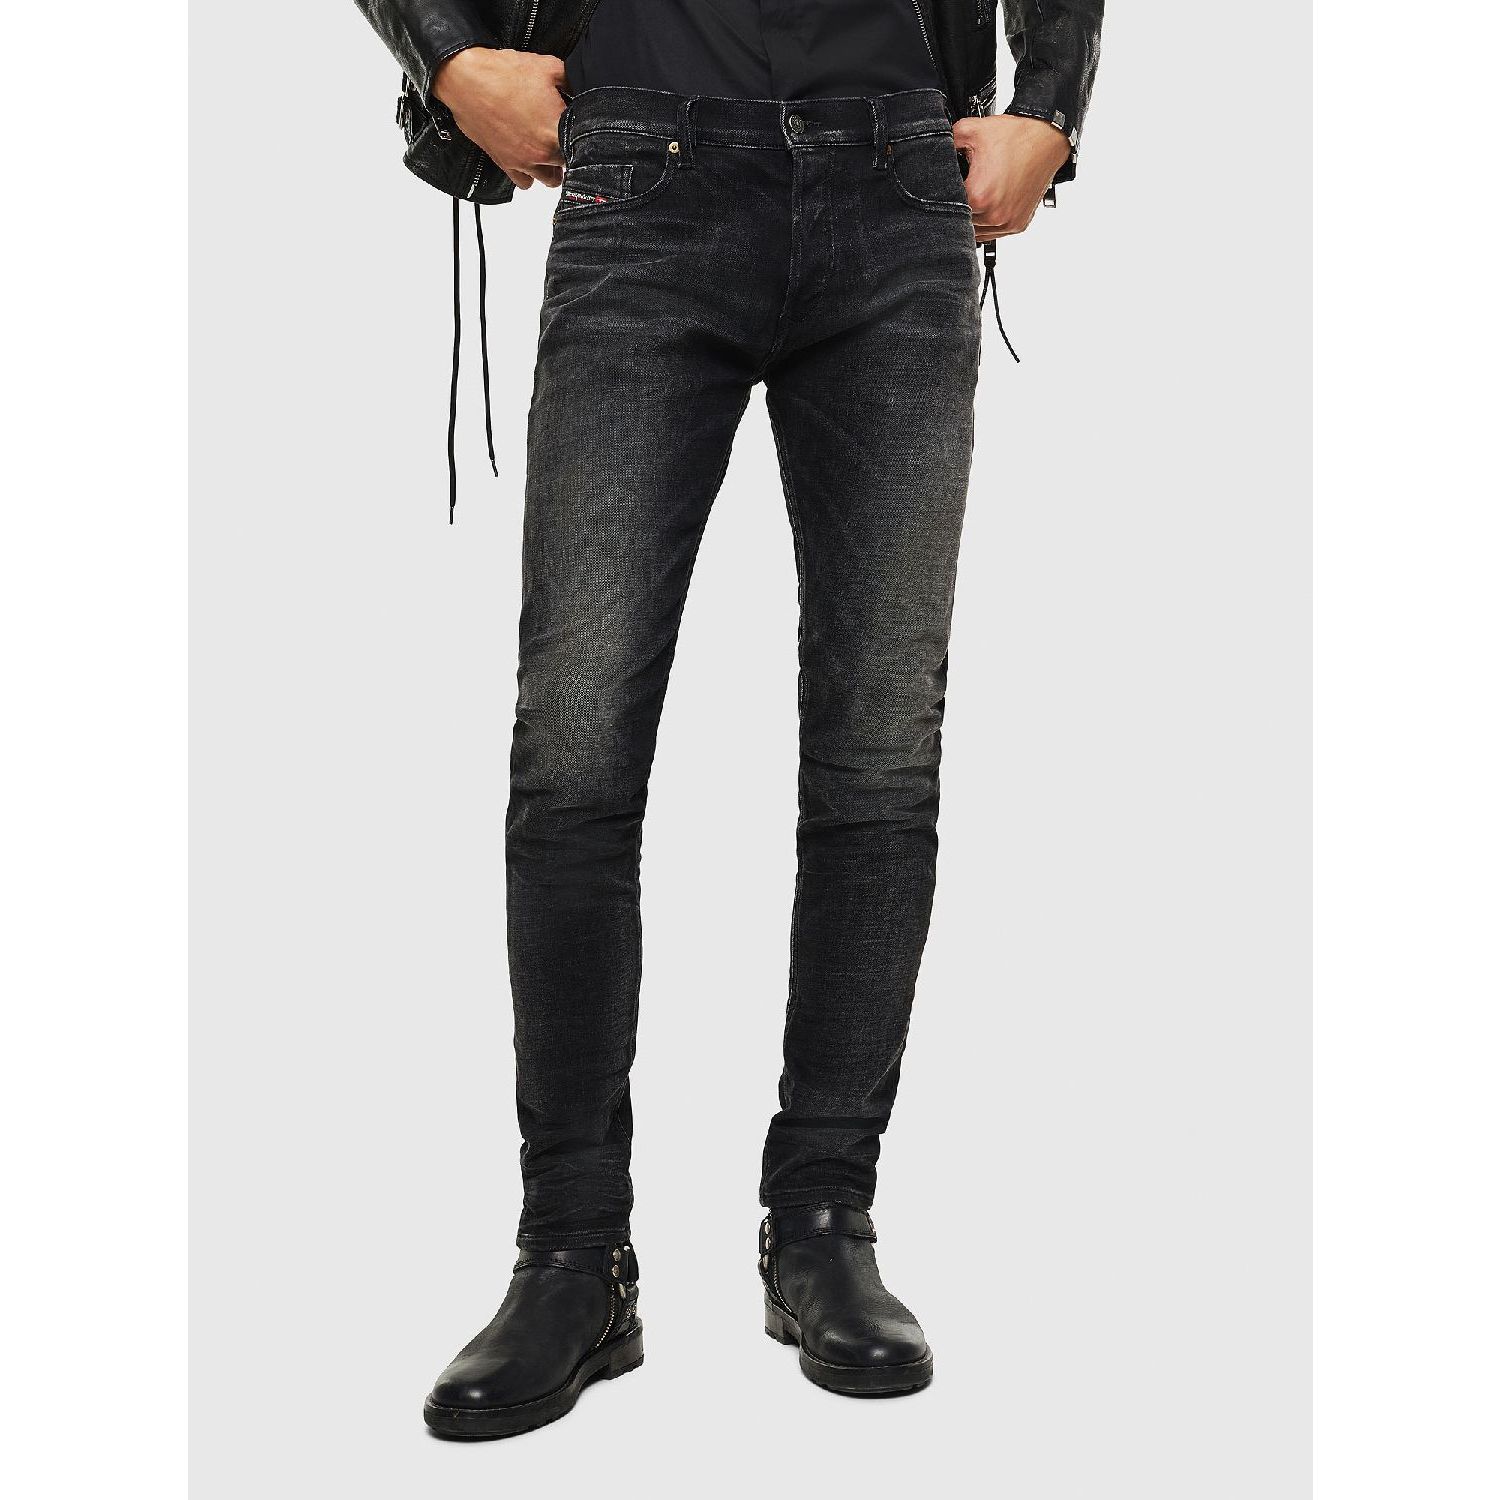 Diesel tepphar-x jeans 98b black